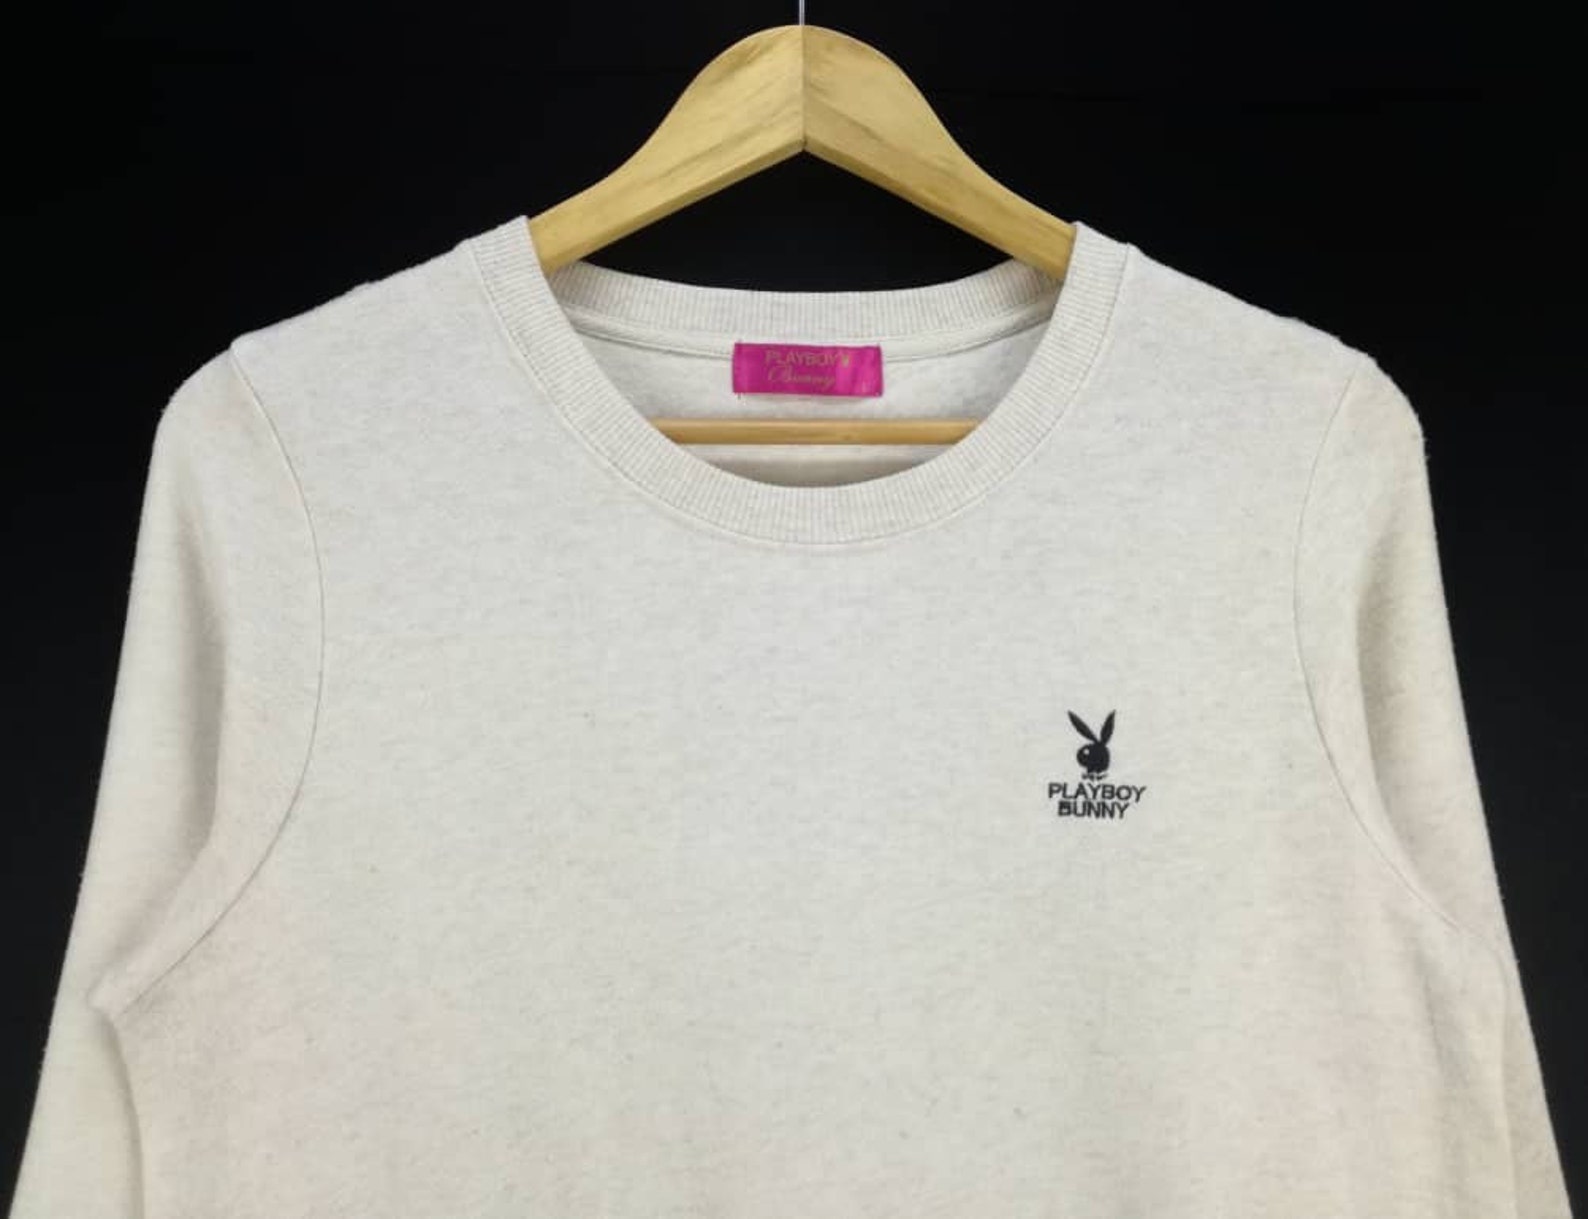 Playboy small embroidered logo crewneck pullover sweatshirt / | Etsy